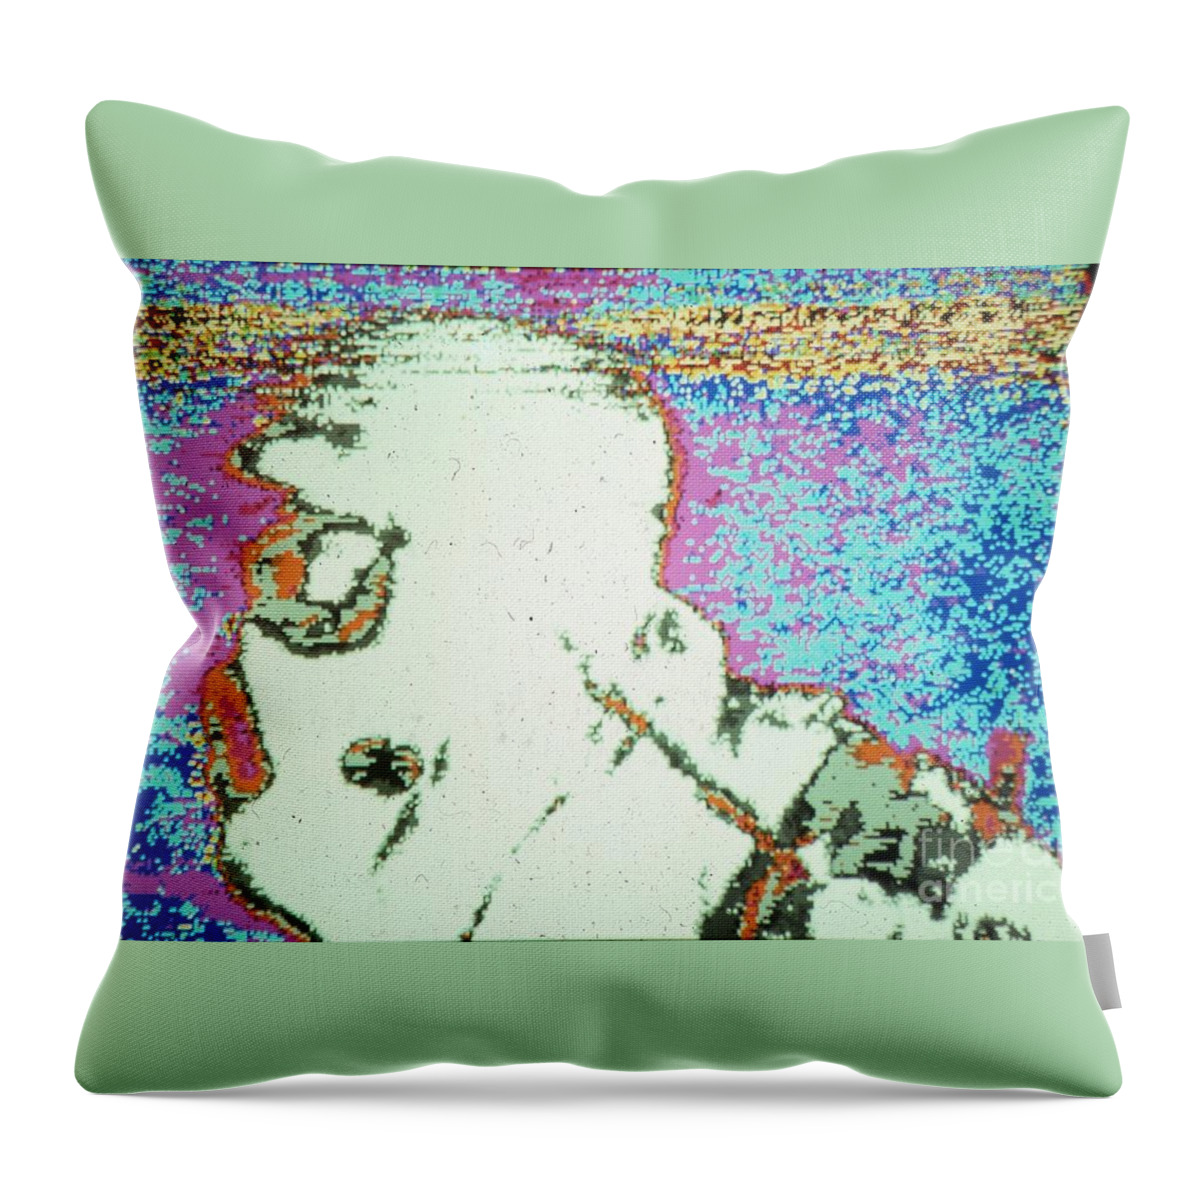 Iraq Throw Pillow featuring the digital art War Image White by George D Gordon III